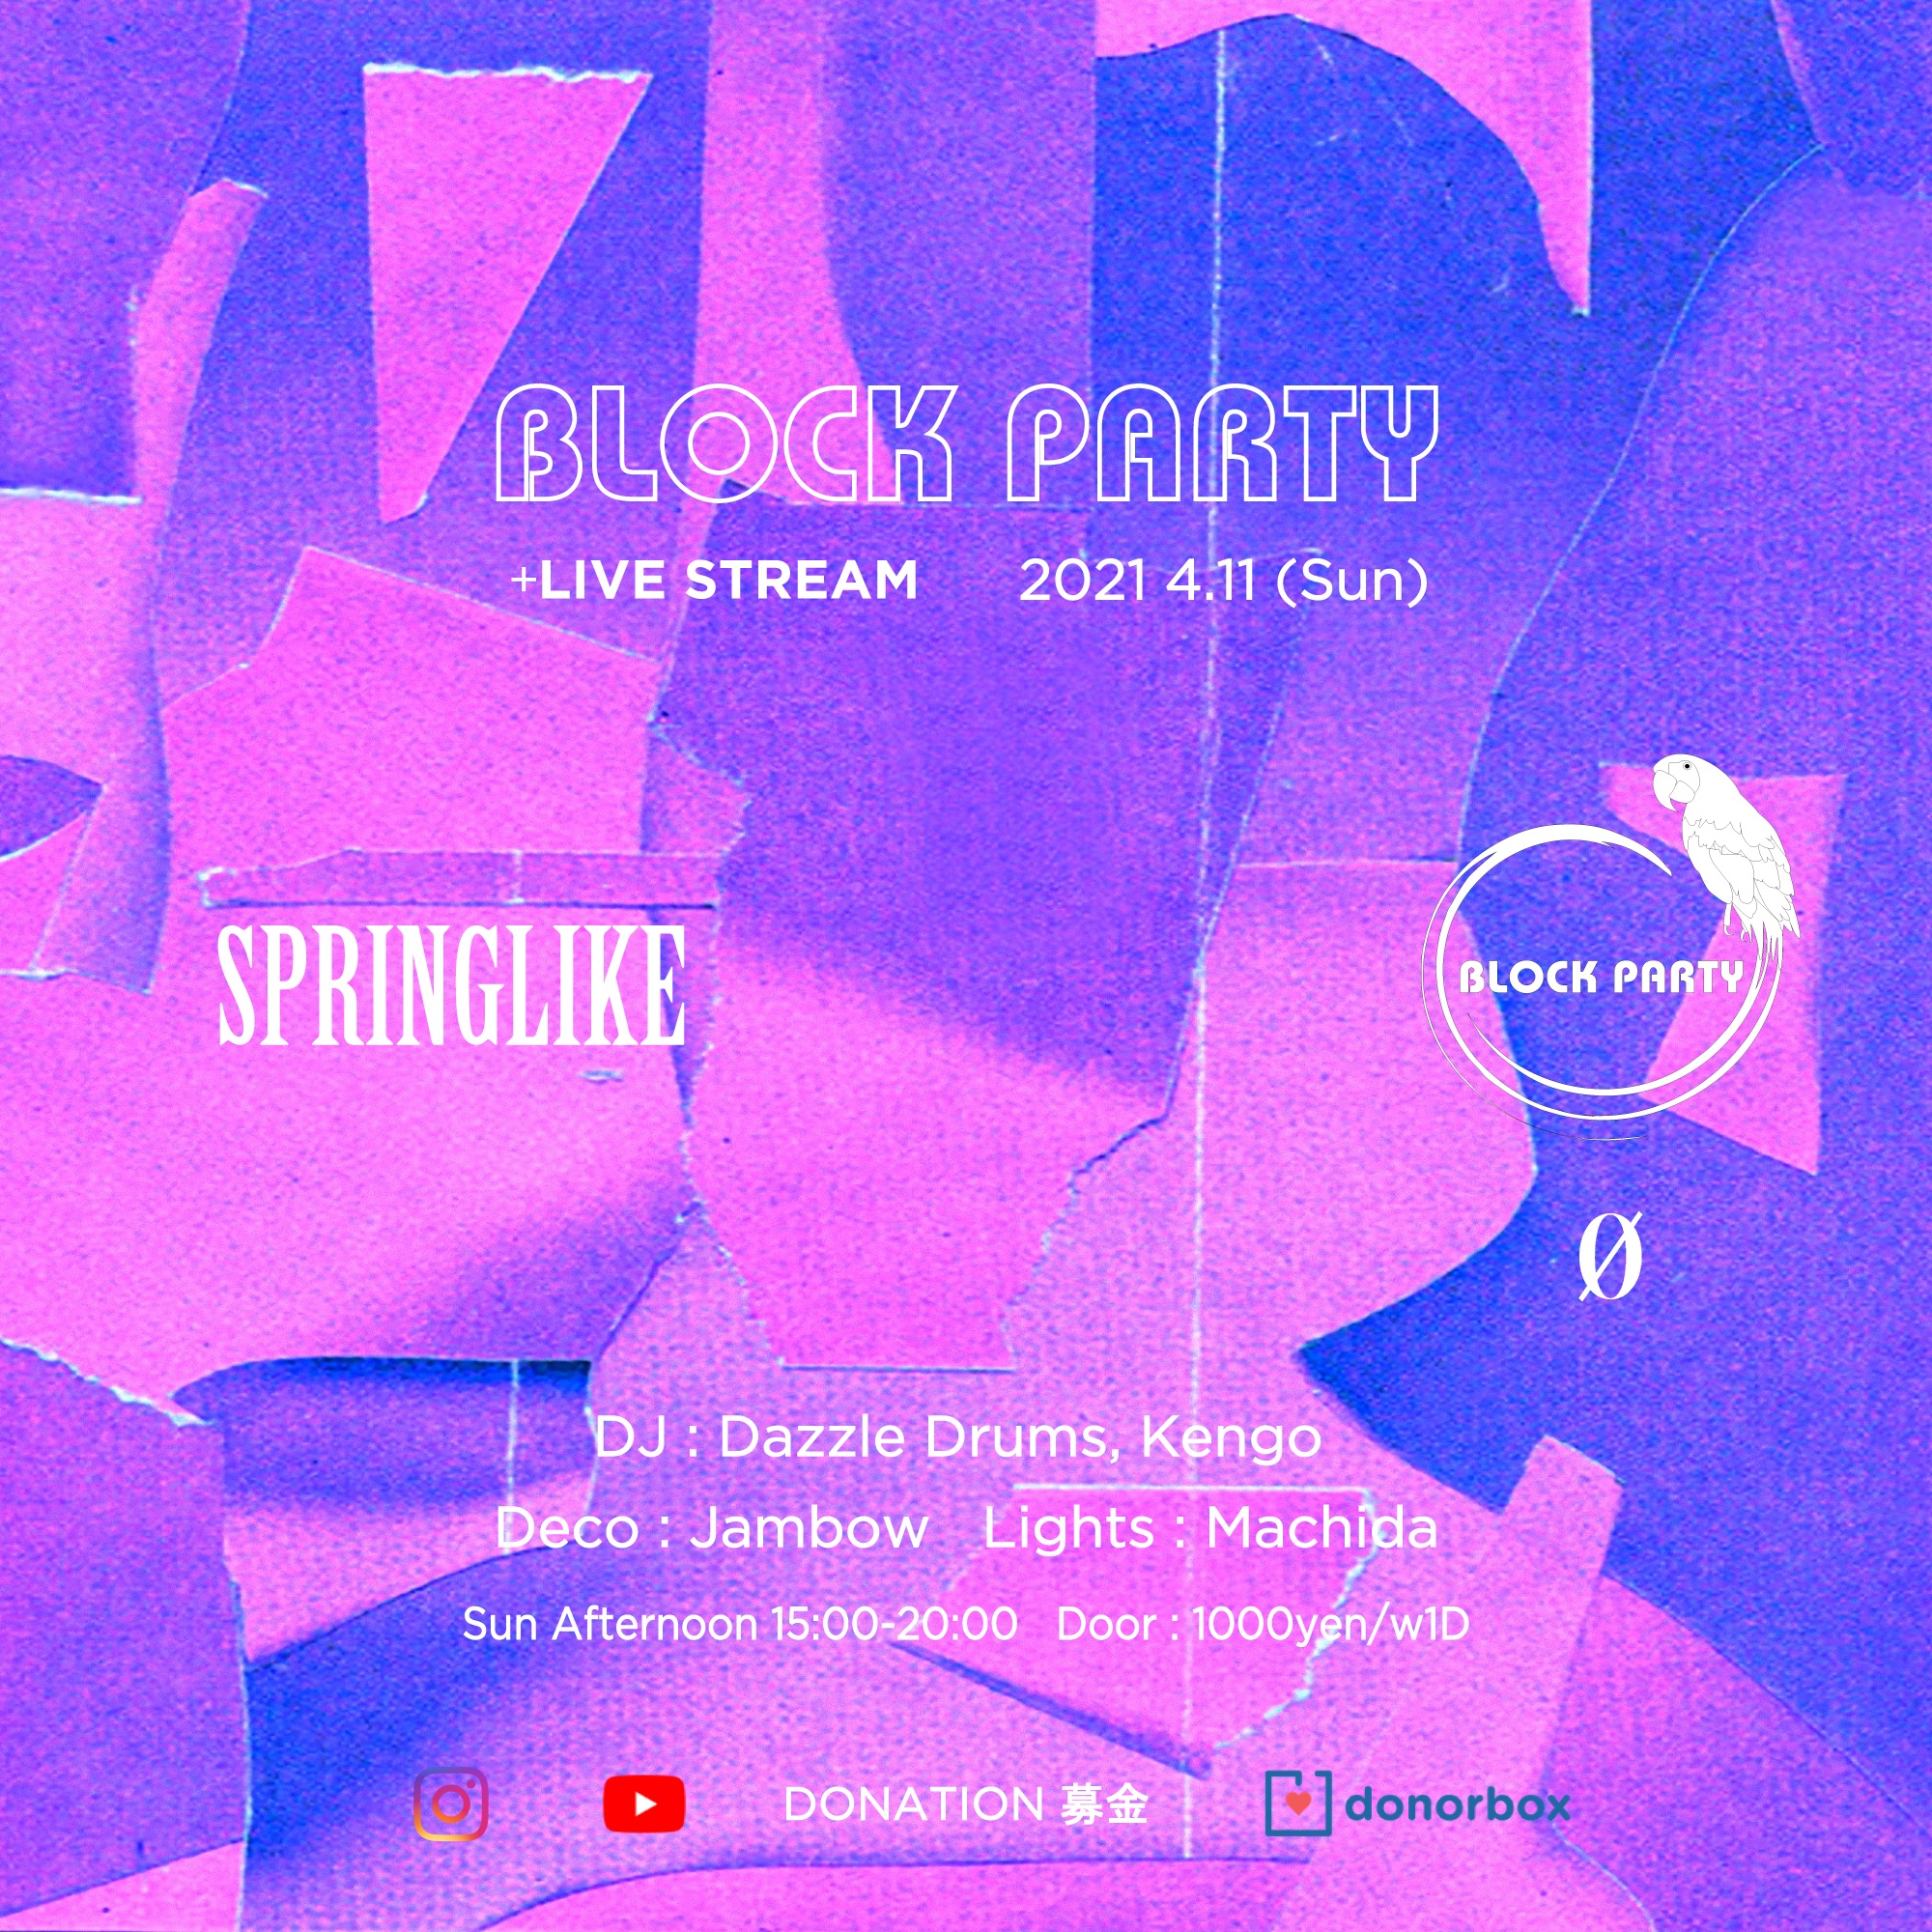 Block Party “Springlike” + Live Stream @ 0 Zero